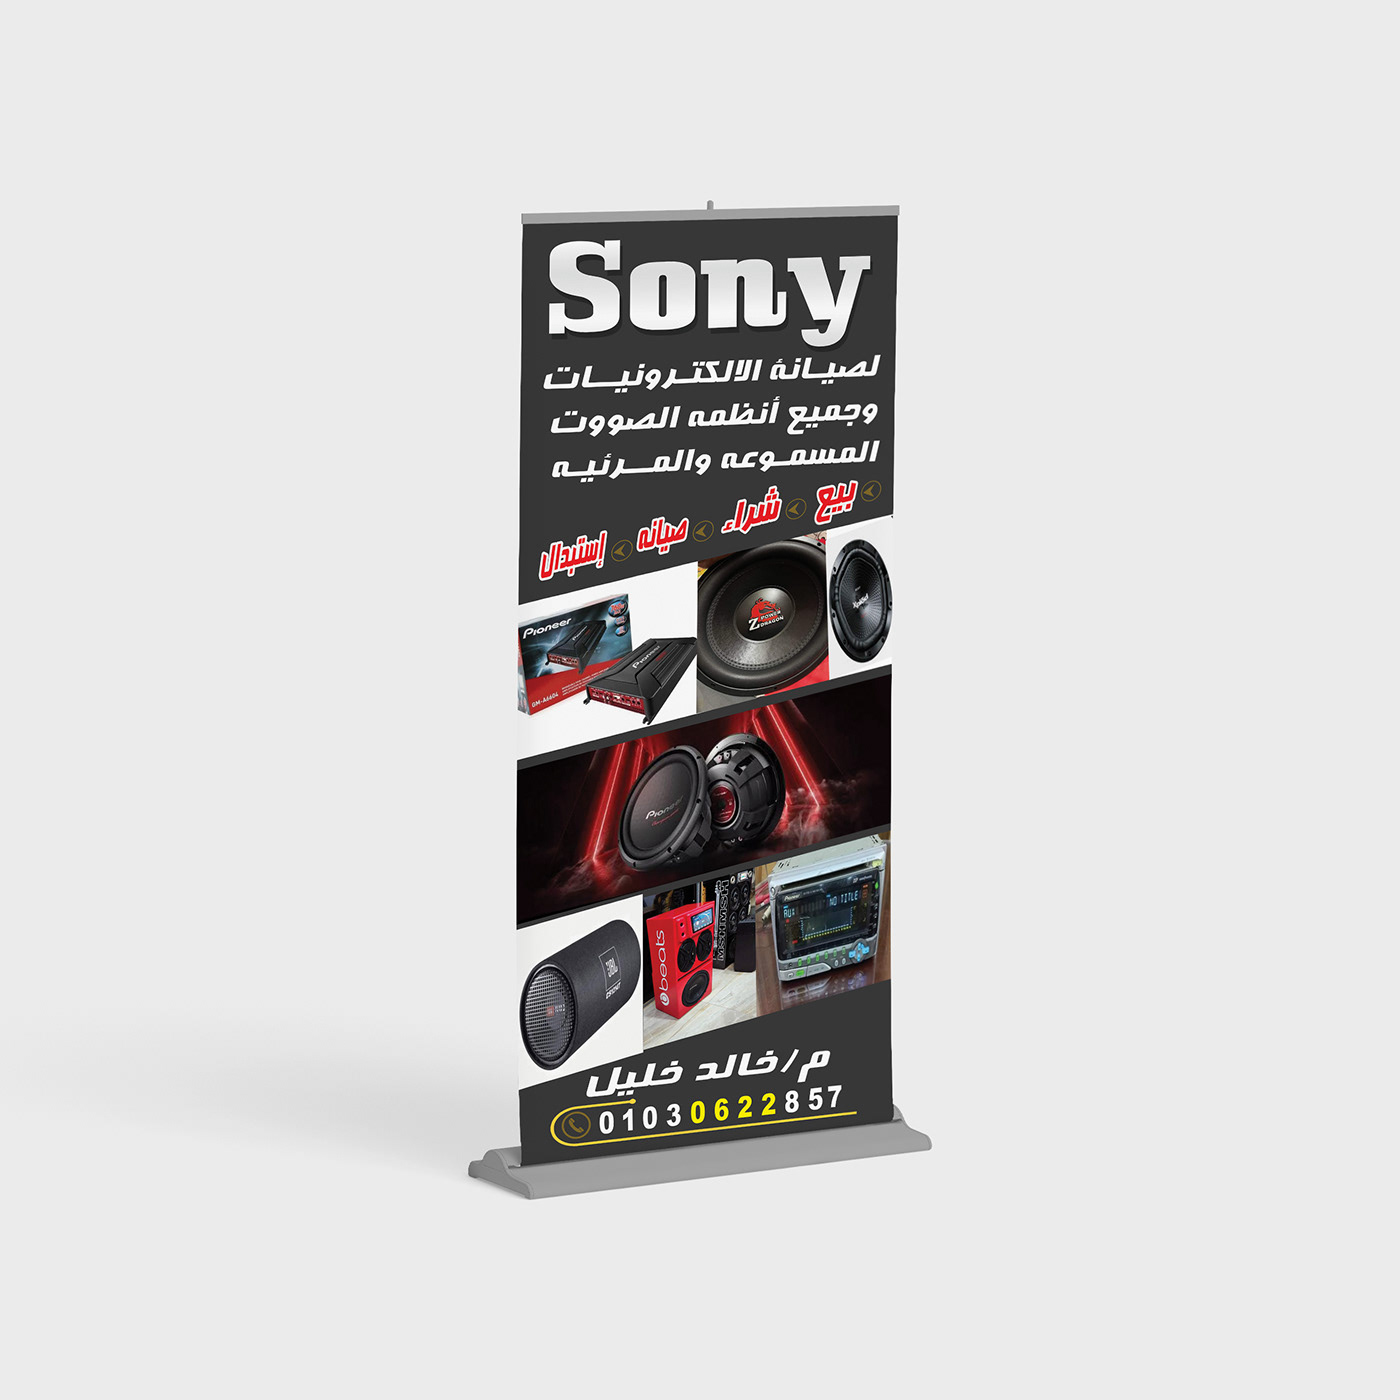 Sony sound music Audio identity video